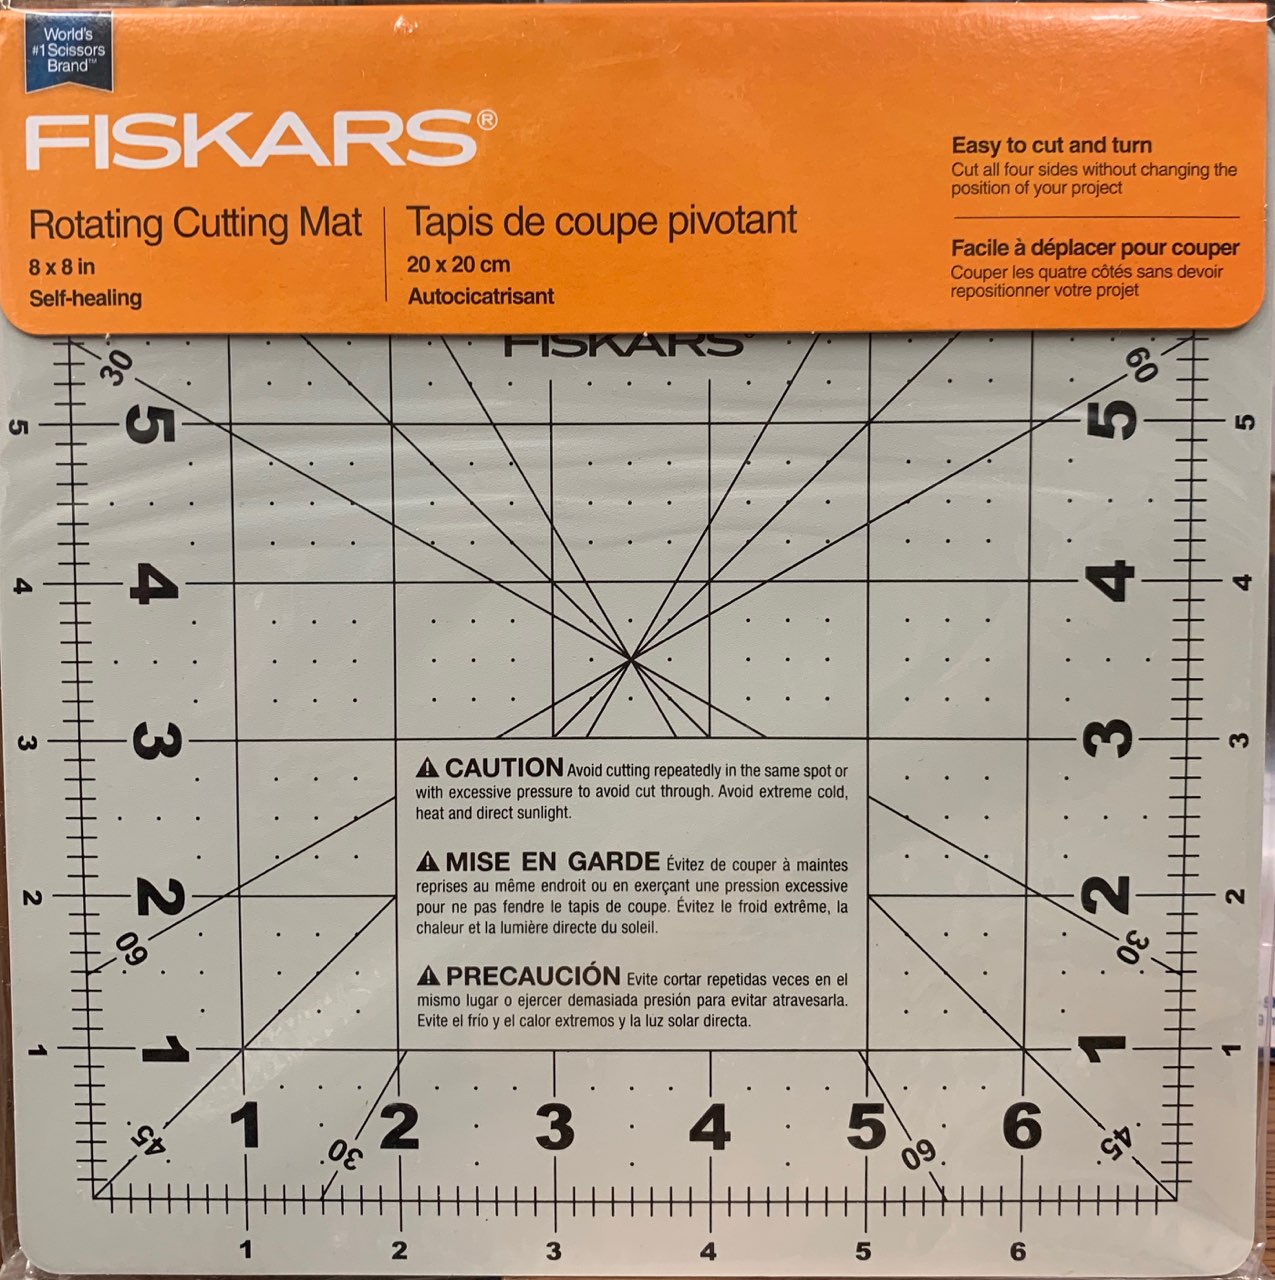 Fiskars - Rotating Cutting Mat 8 x 8 in self-healing